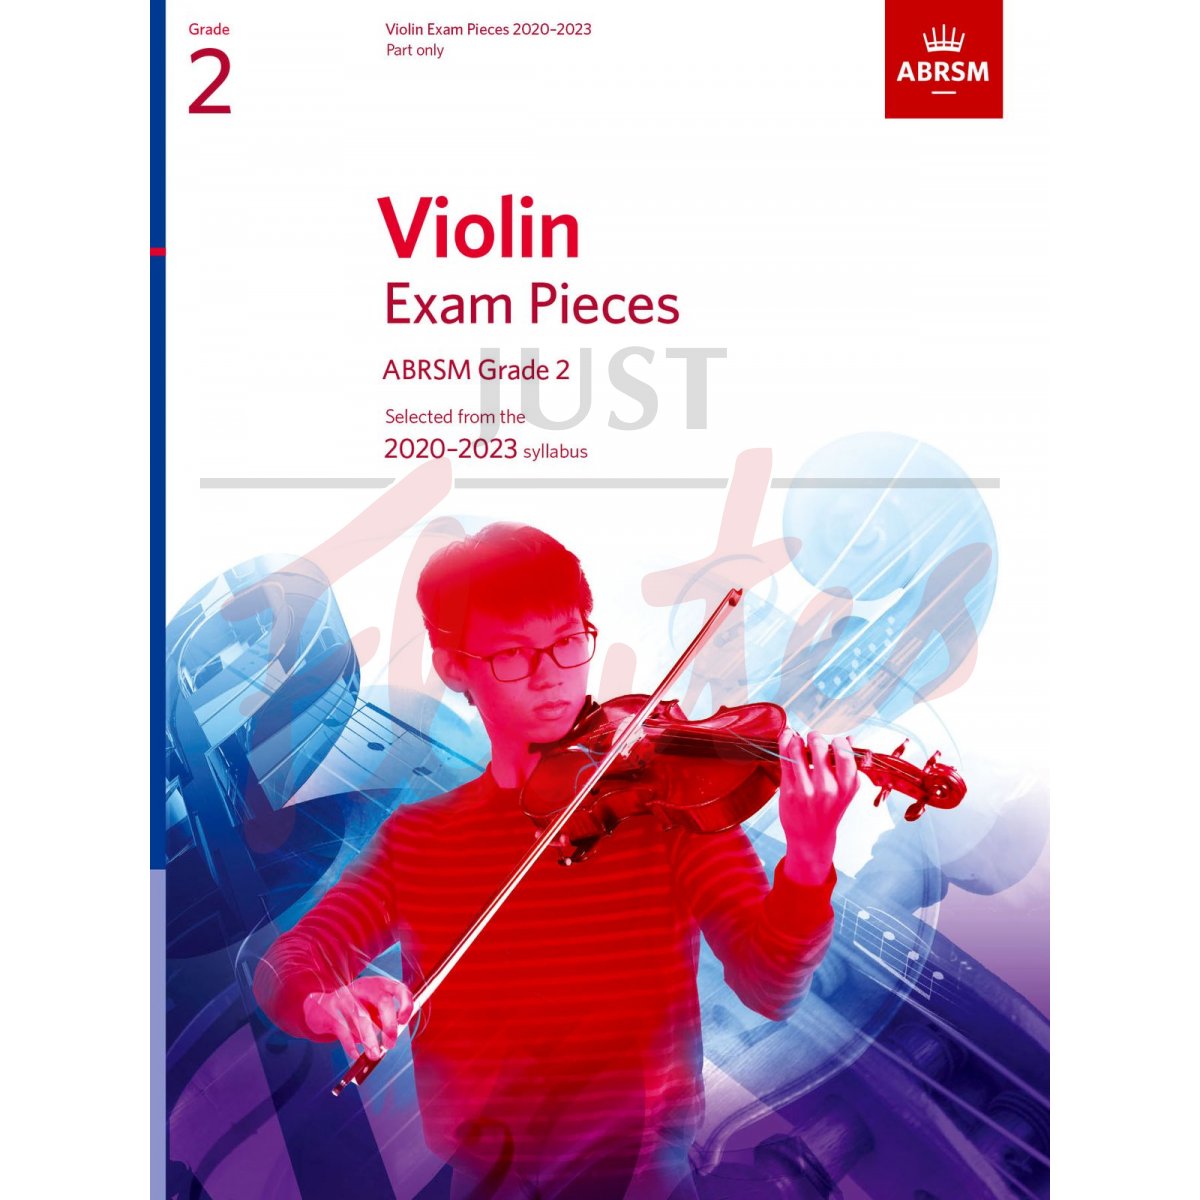 Violin Exam Pieces 2020-2023, Grade 2 [Part Only]